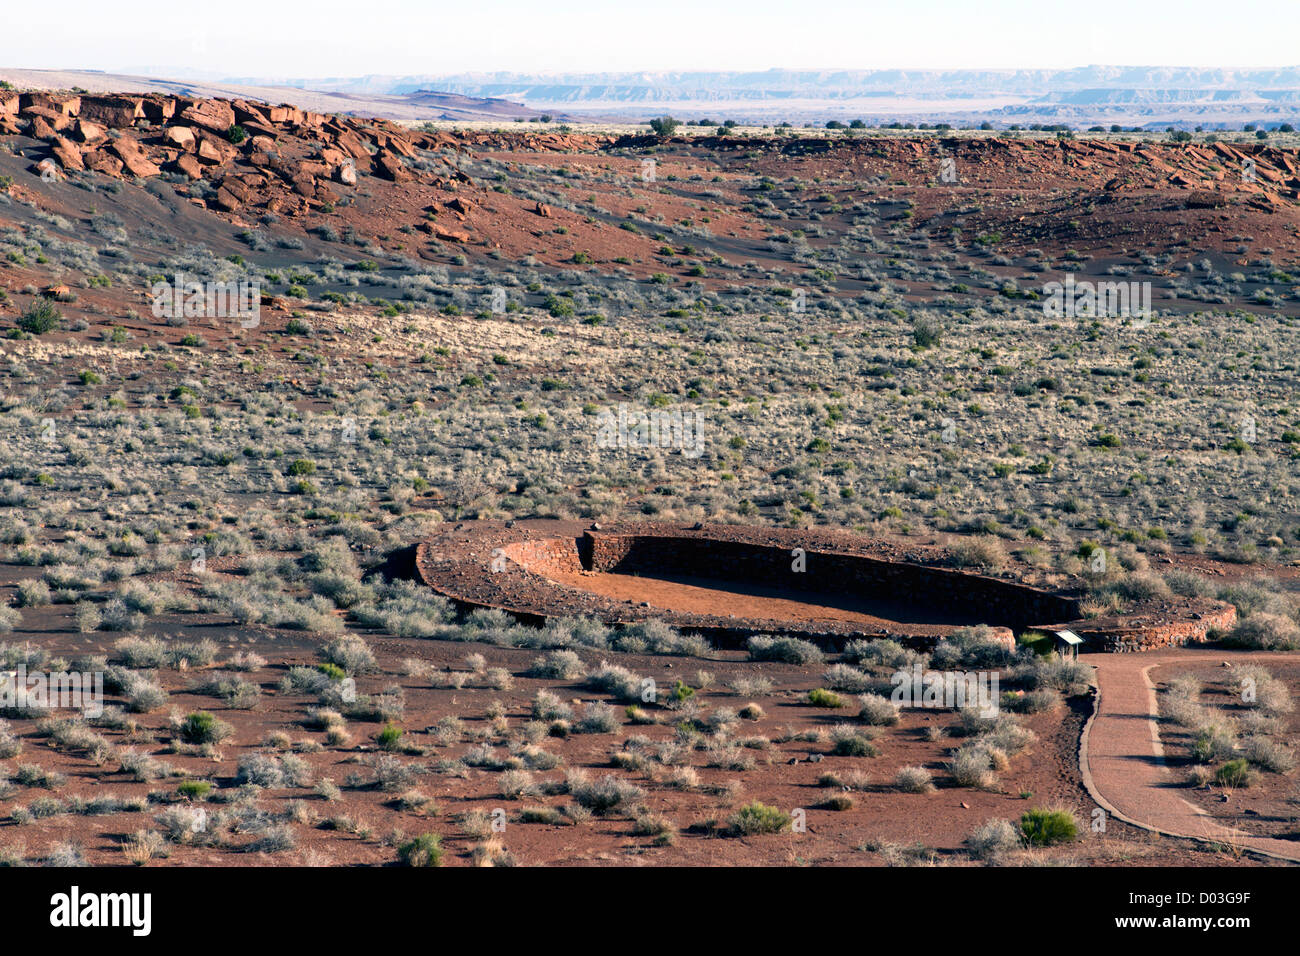 USA, Arizona. Native American ruins at Wupatki National Monument, located in north-central Arizona, near Flagstaff. Stock Photo